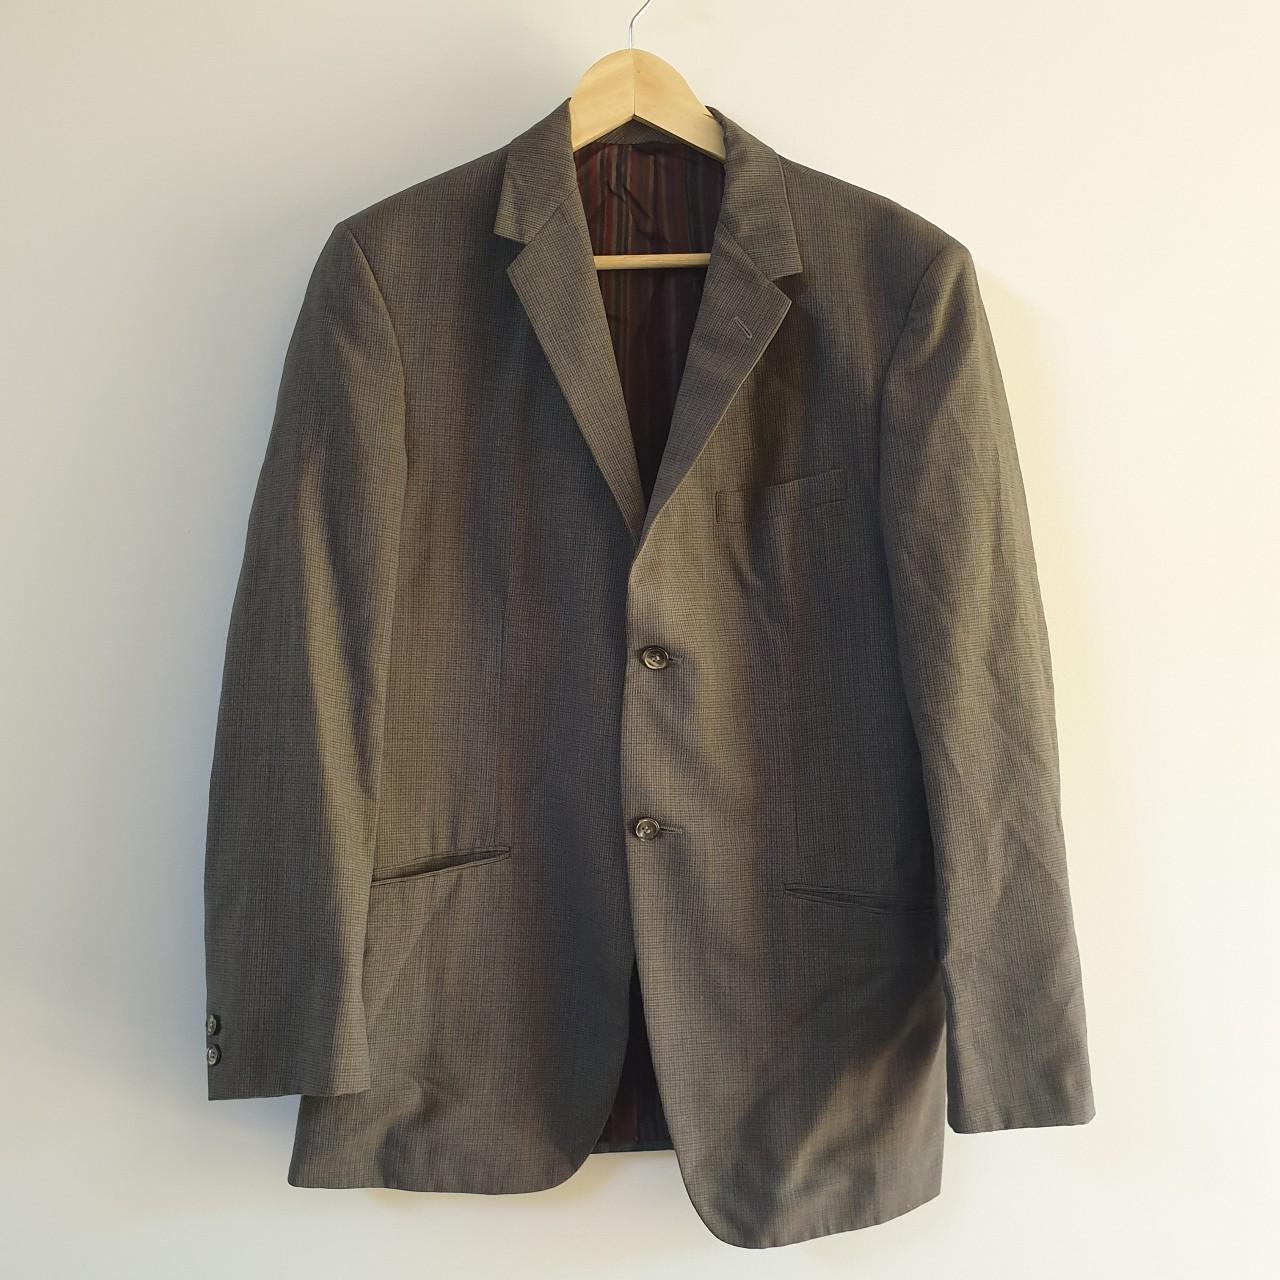 Vintage Suit Jacket Pre-loved ex-musical theatre... - Depop